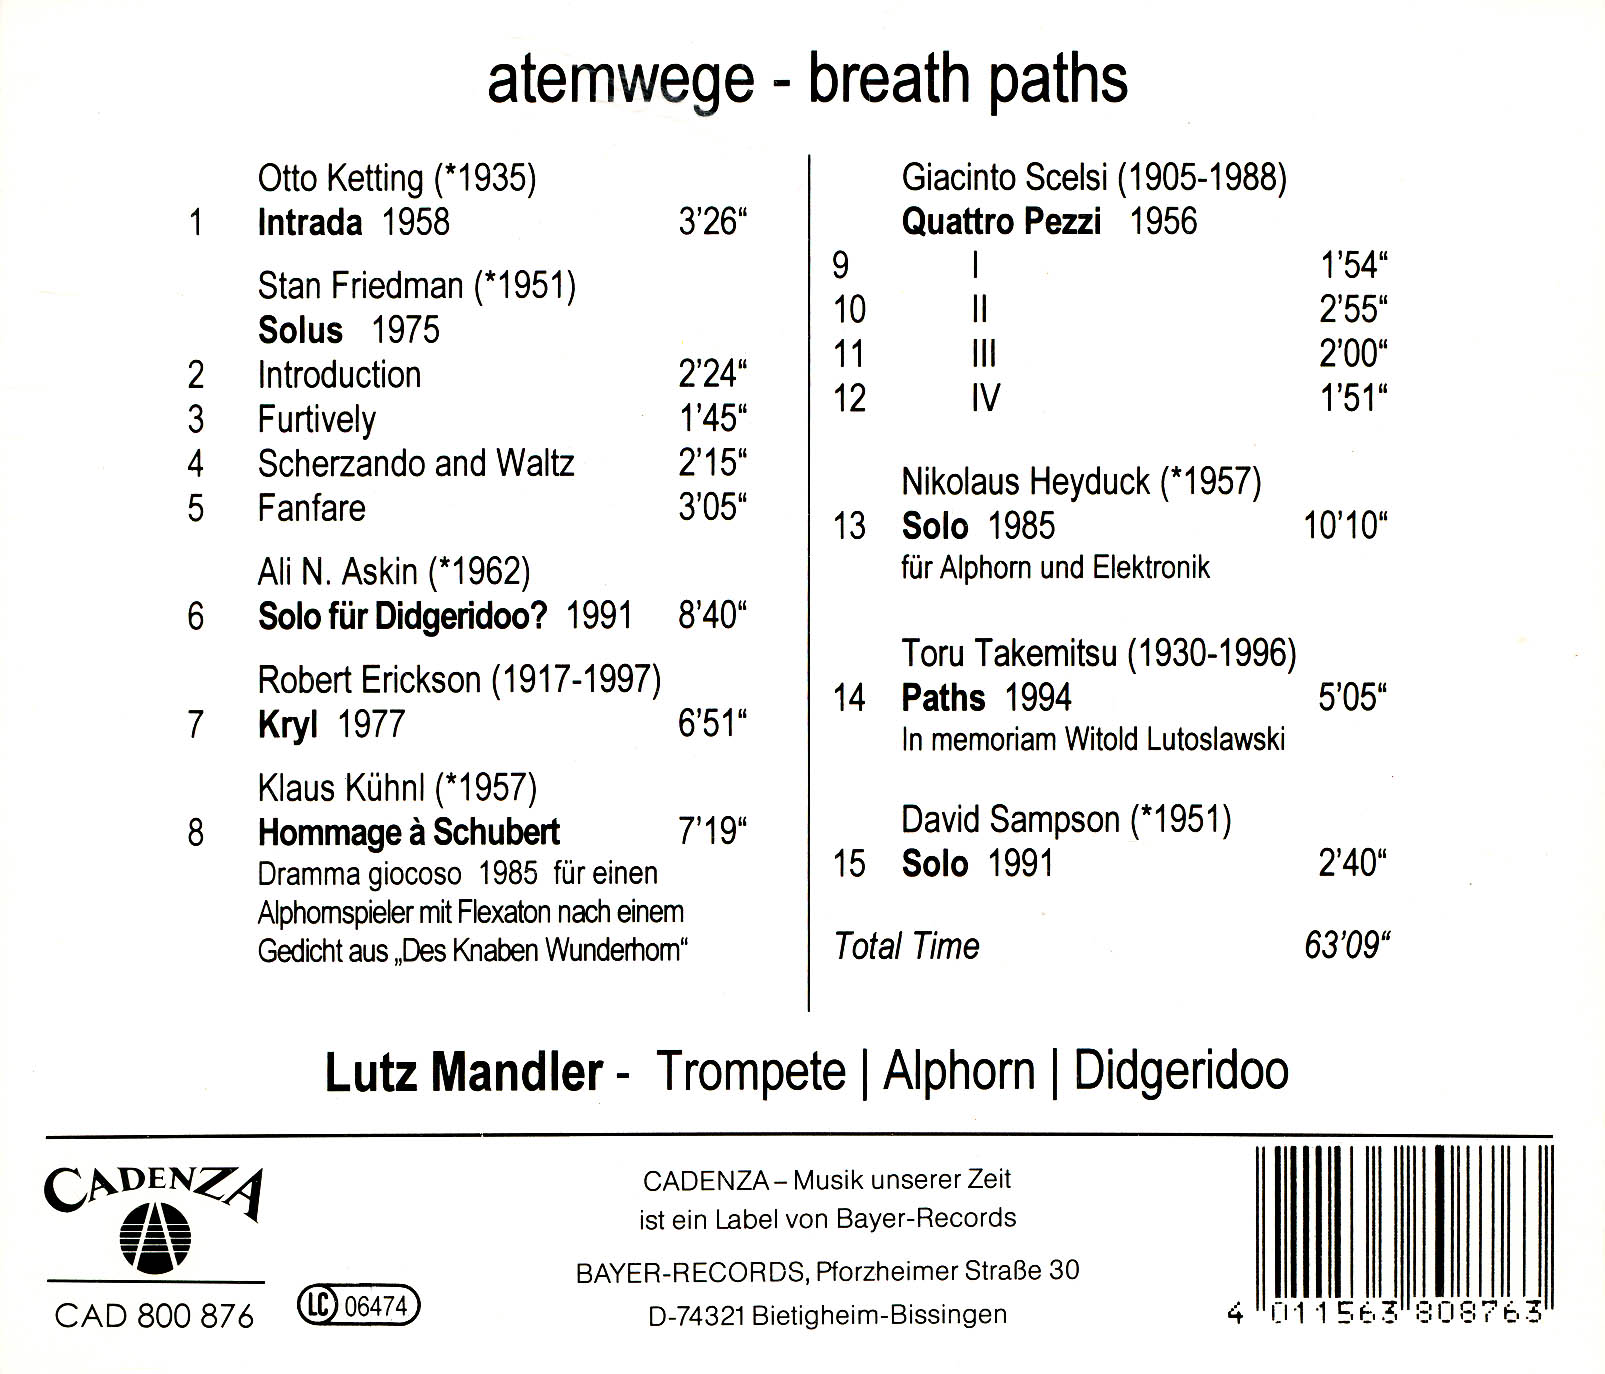 Atemwege - breath paths